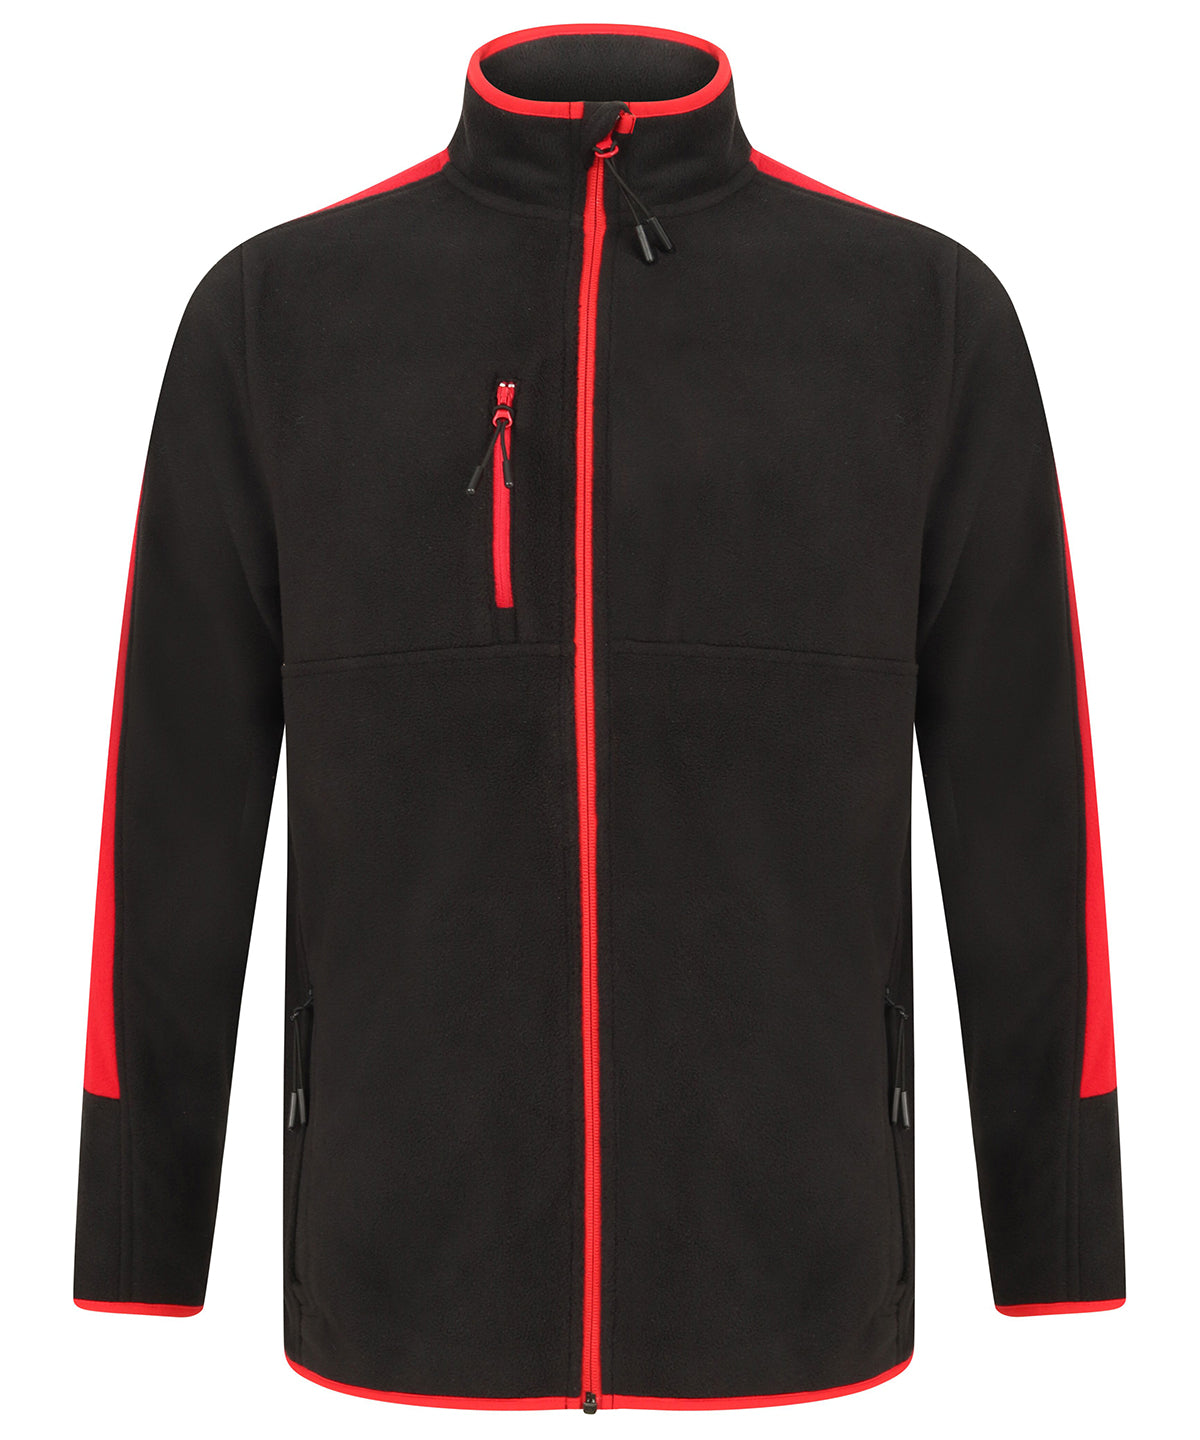 Personalised Jackets - Black Finden & Hales Unisex microfleece jacket